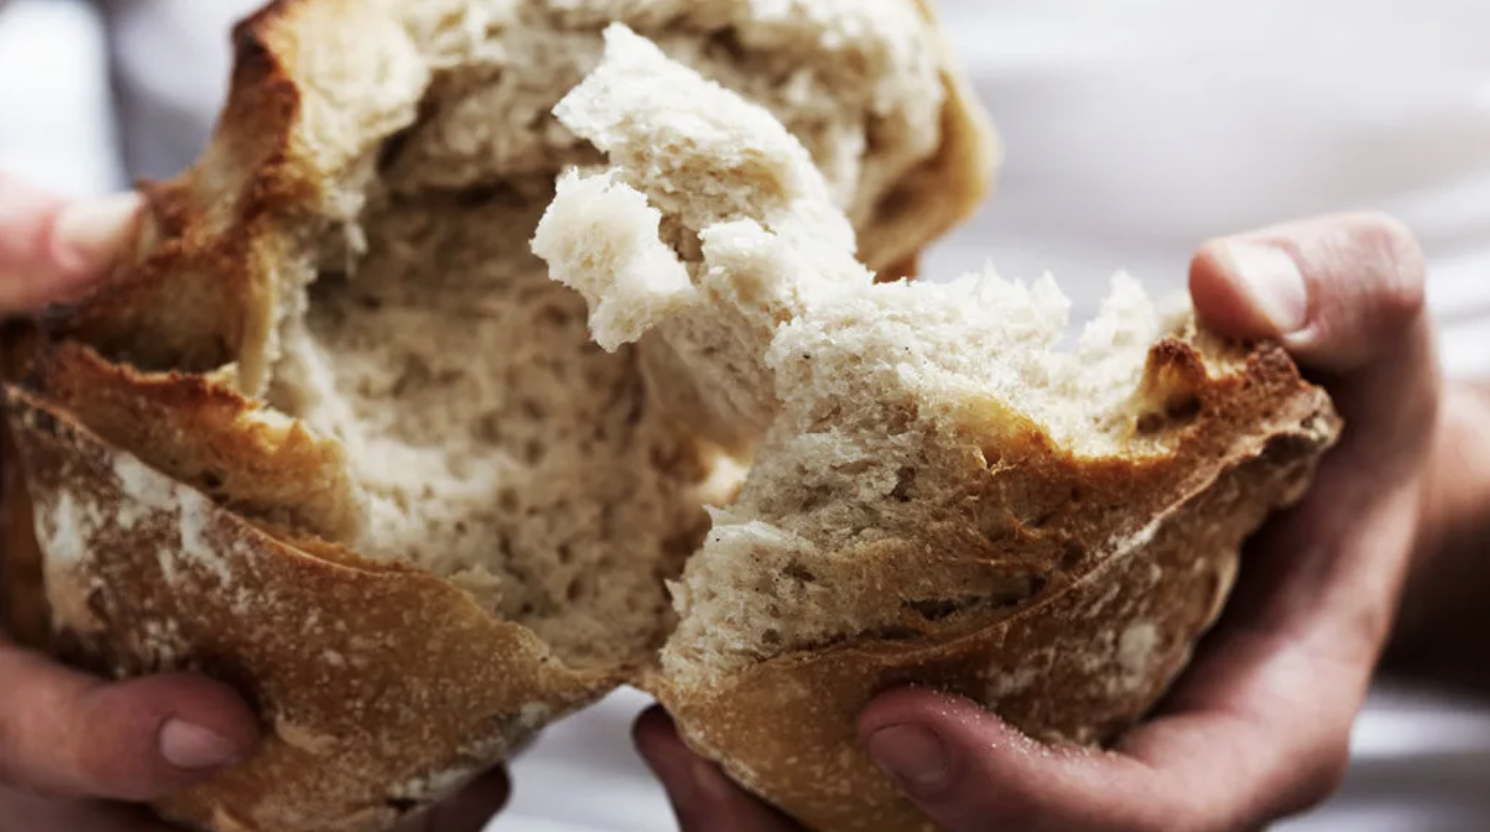 Loaf of artisan bread being broken in half demonstrating gluten structure